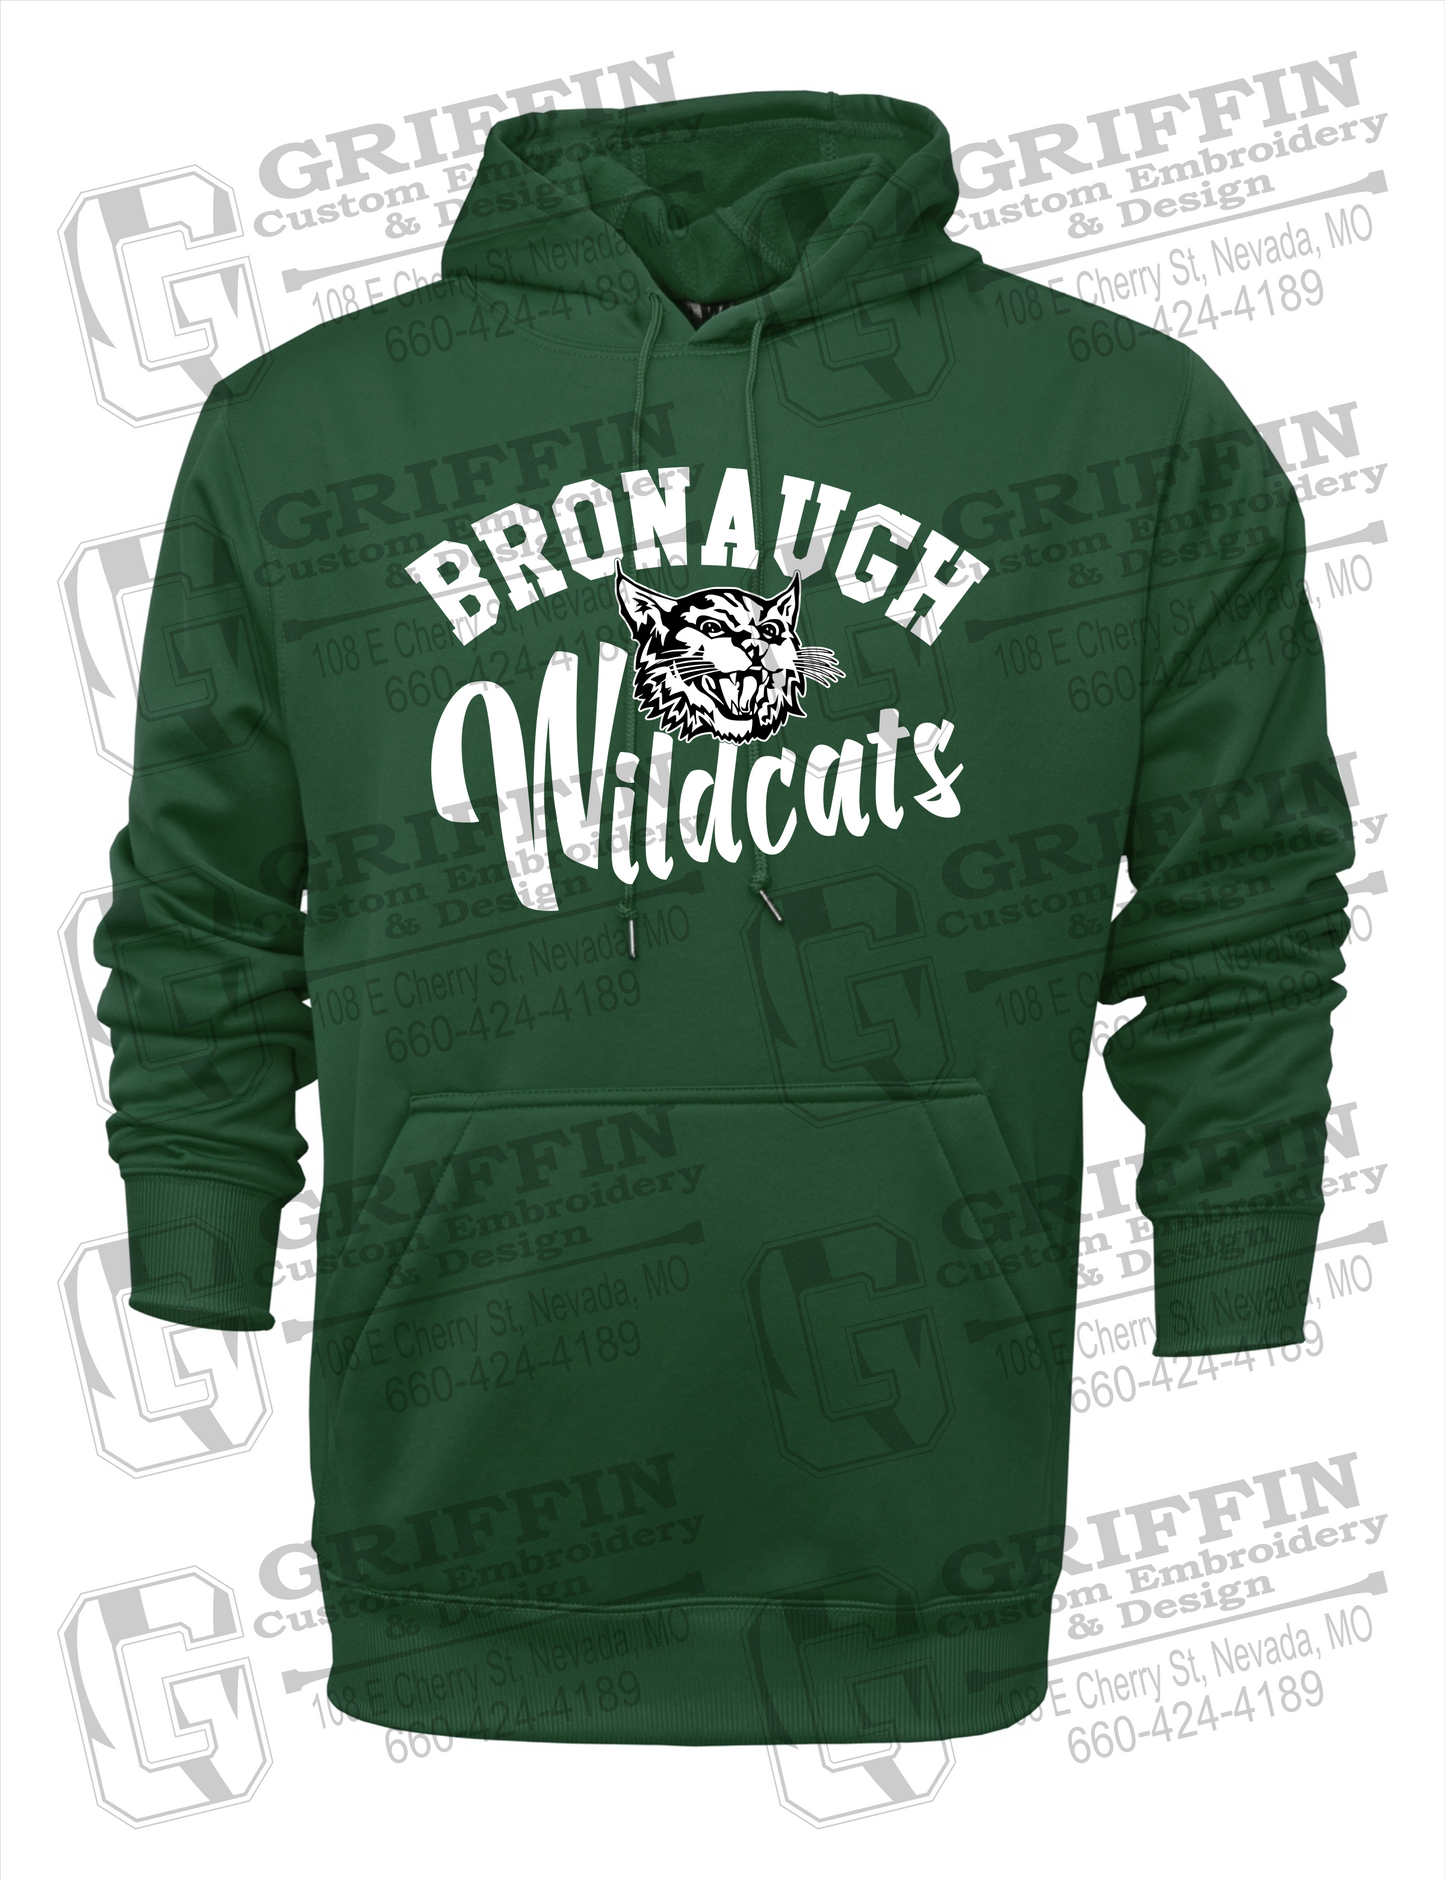 Bronaugh Wildcats 24-A Hoodie